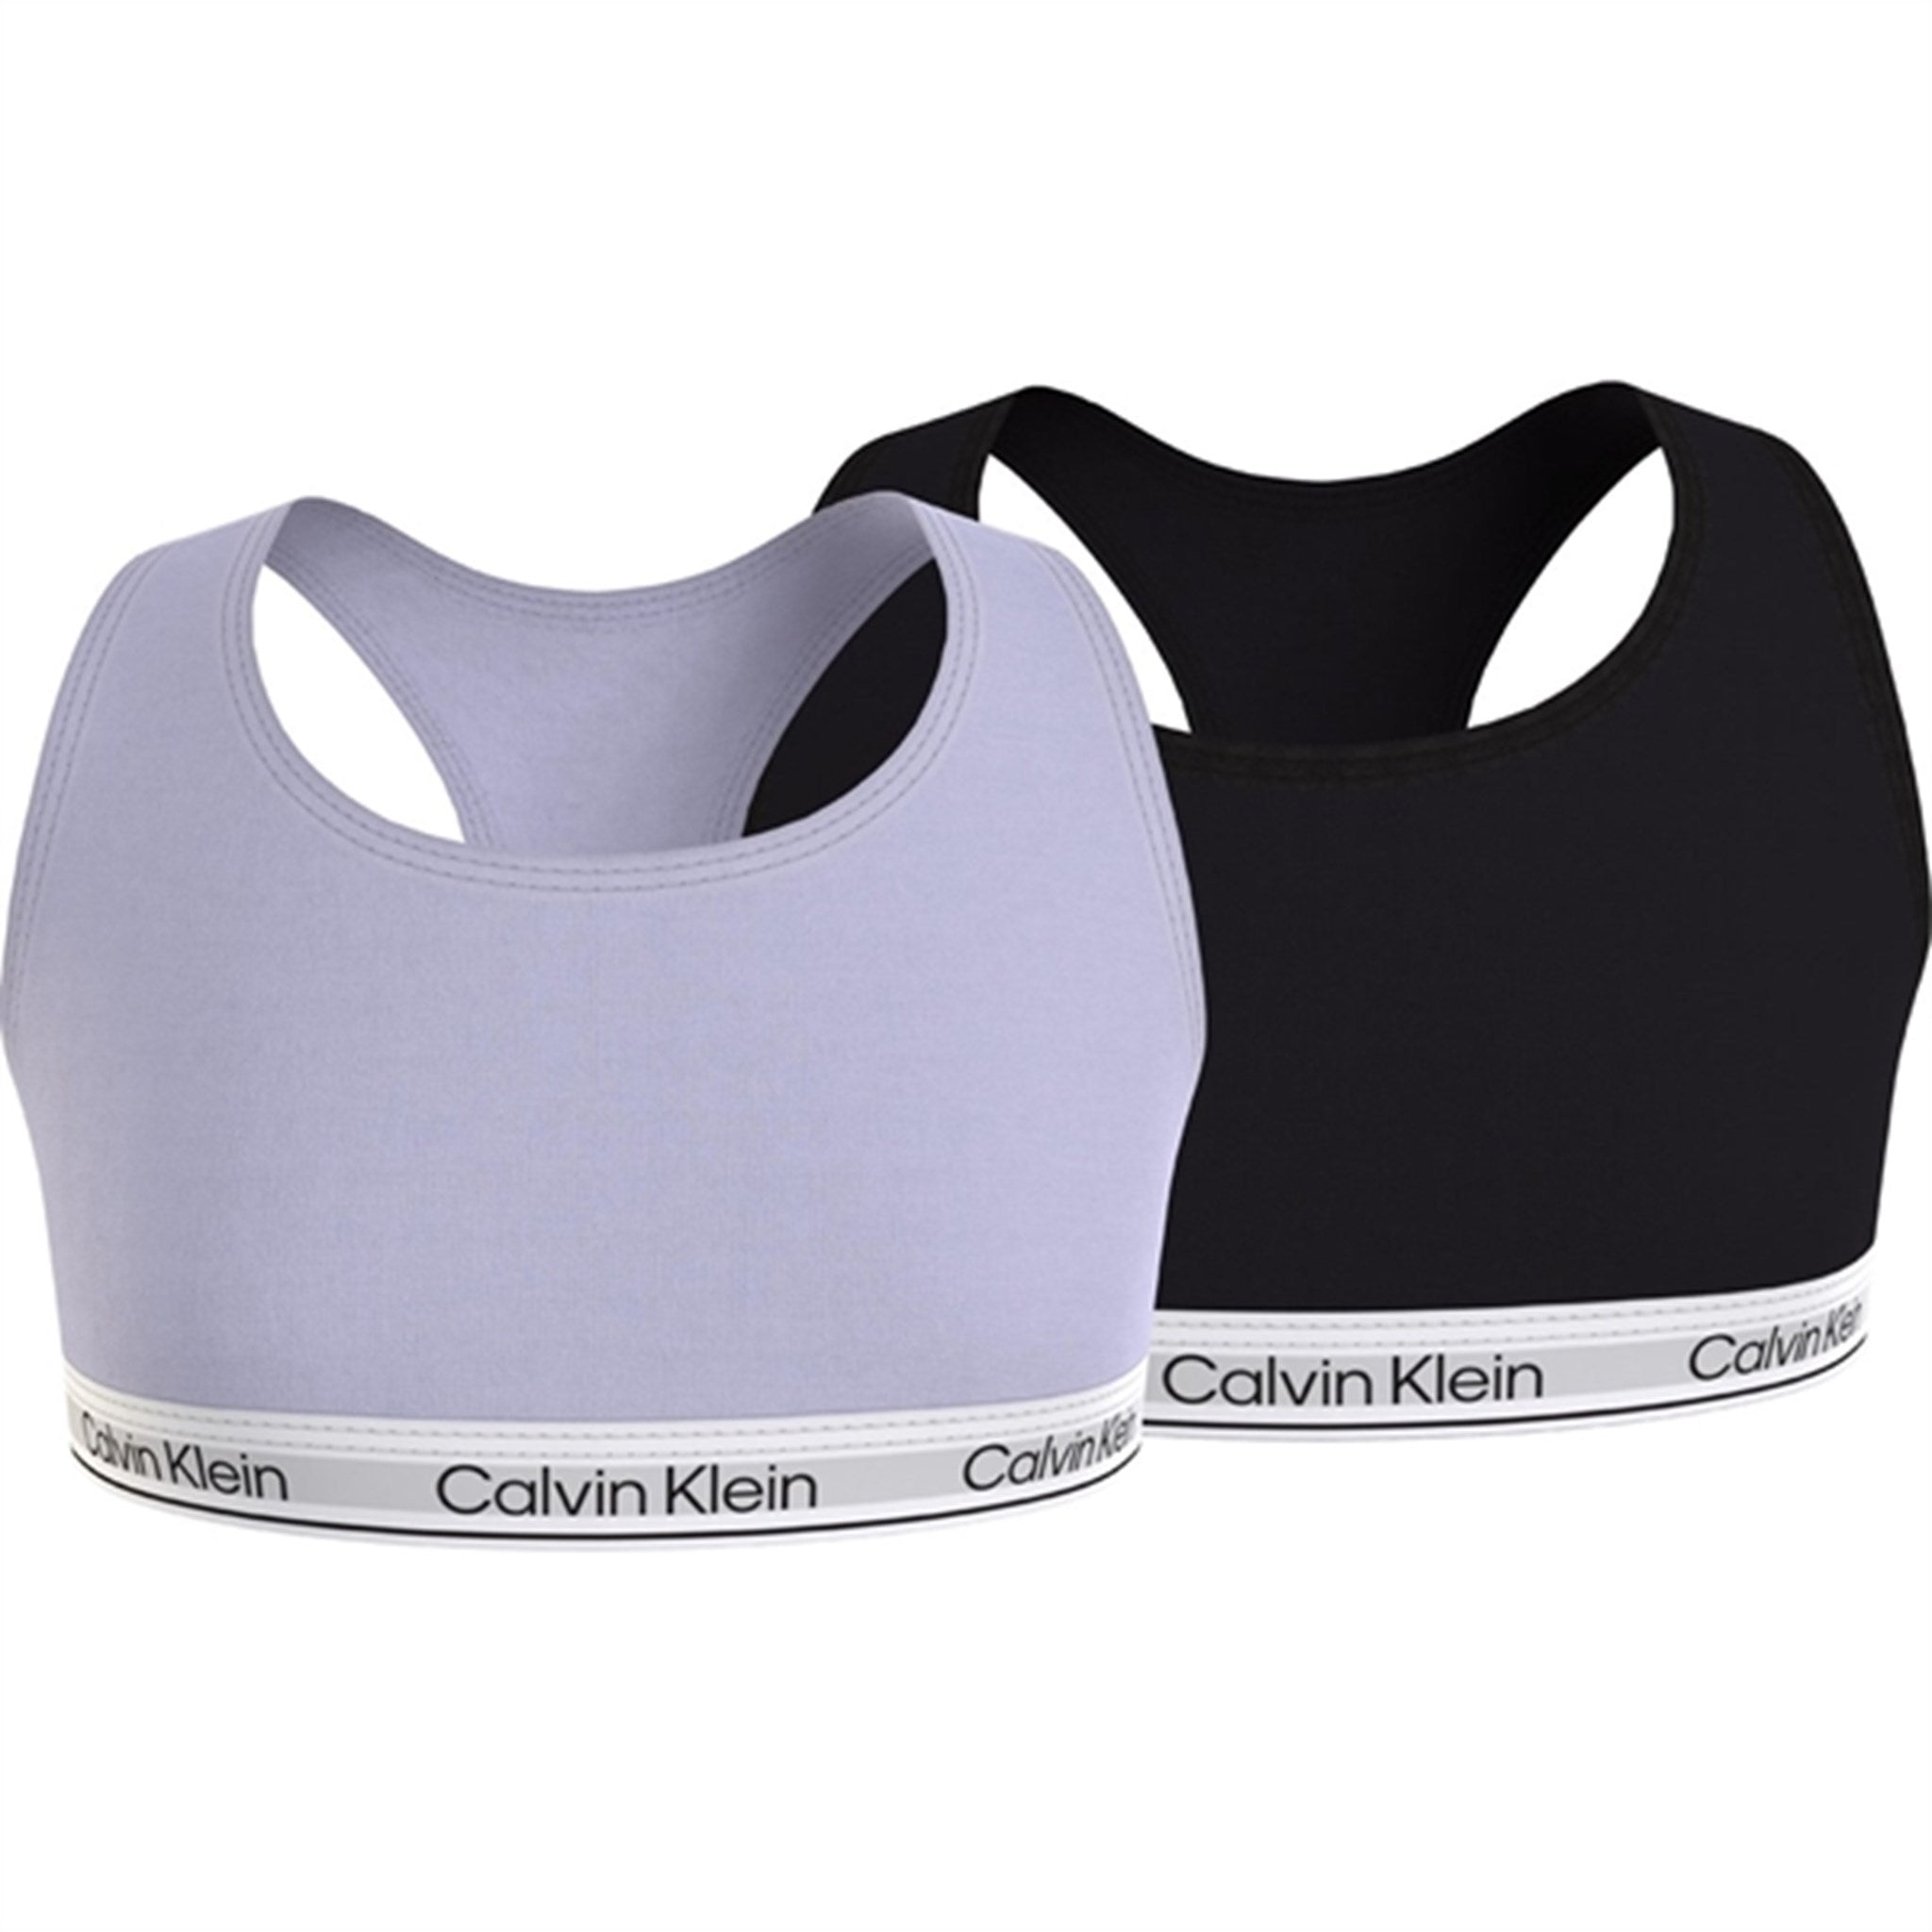 Calvin Klein Bralette 2-pack Lavendersplash/Pvh Black